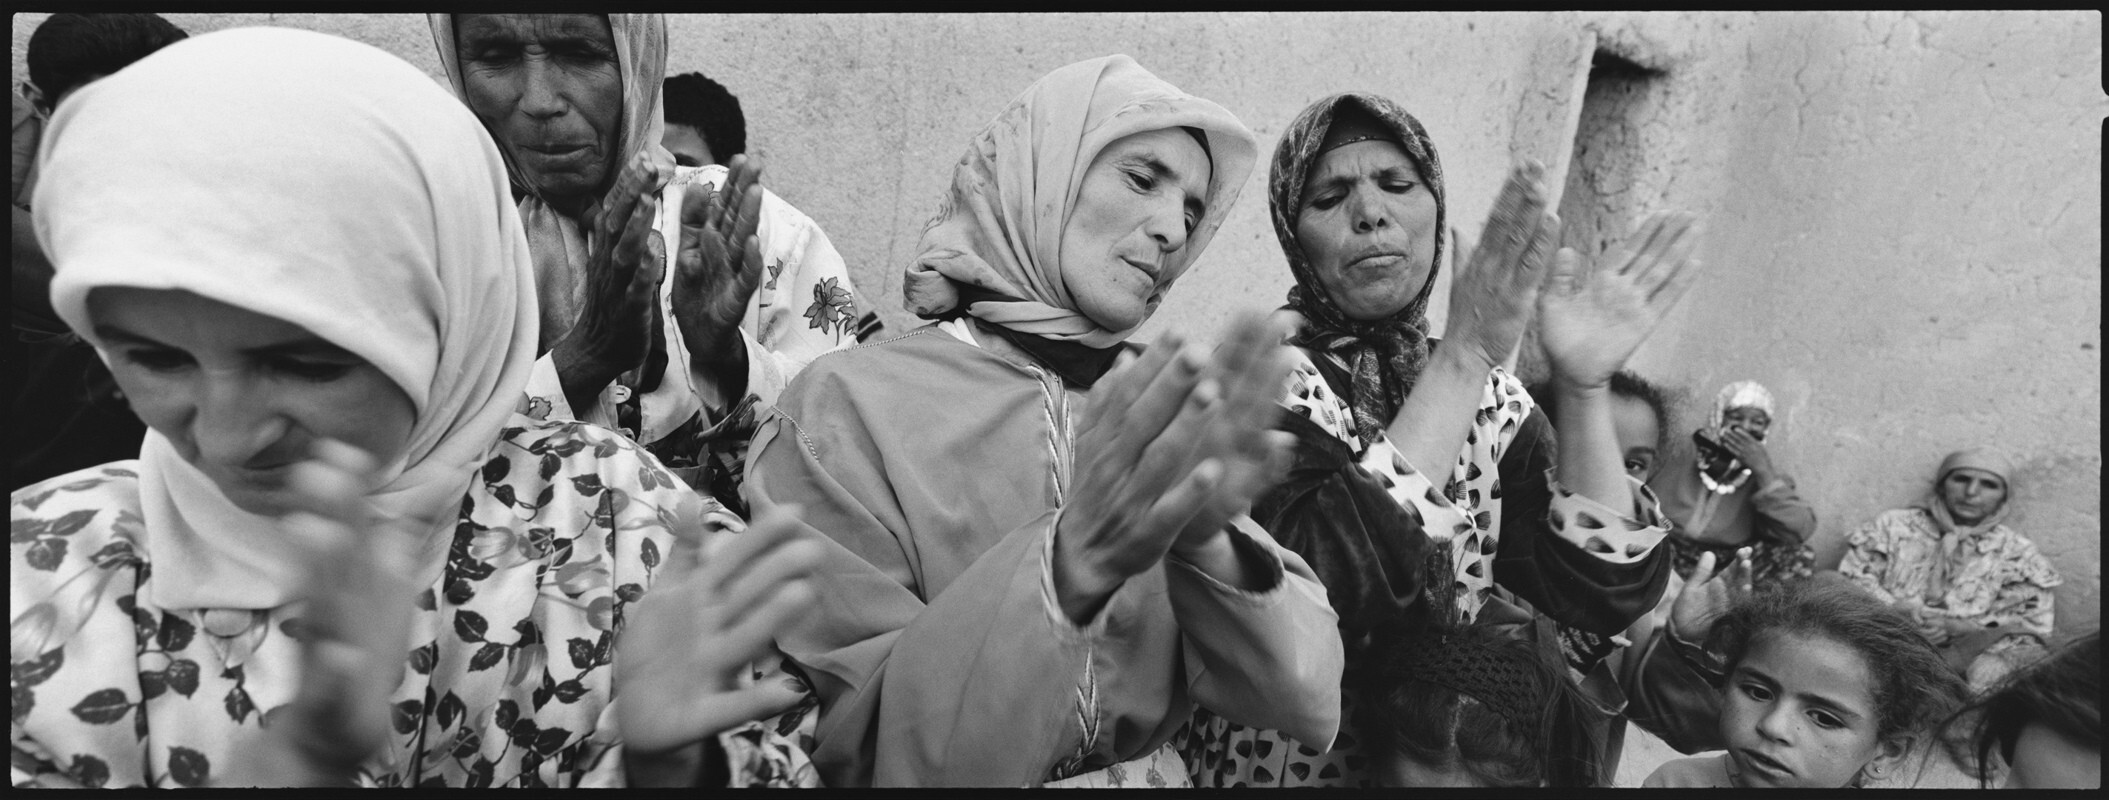 Жители деревни, фильм Вавилон, деревня недалеко от Уарзазата, Марокко, 2005 г. За кулисами. Фотограф Мэри Эллен Марк